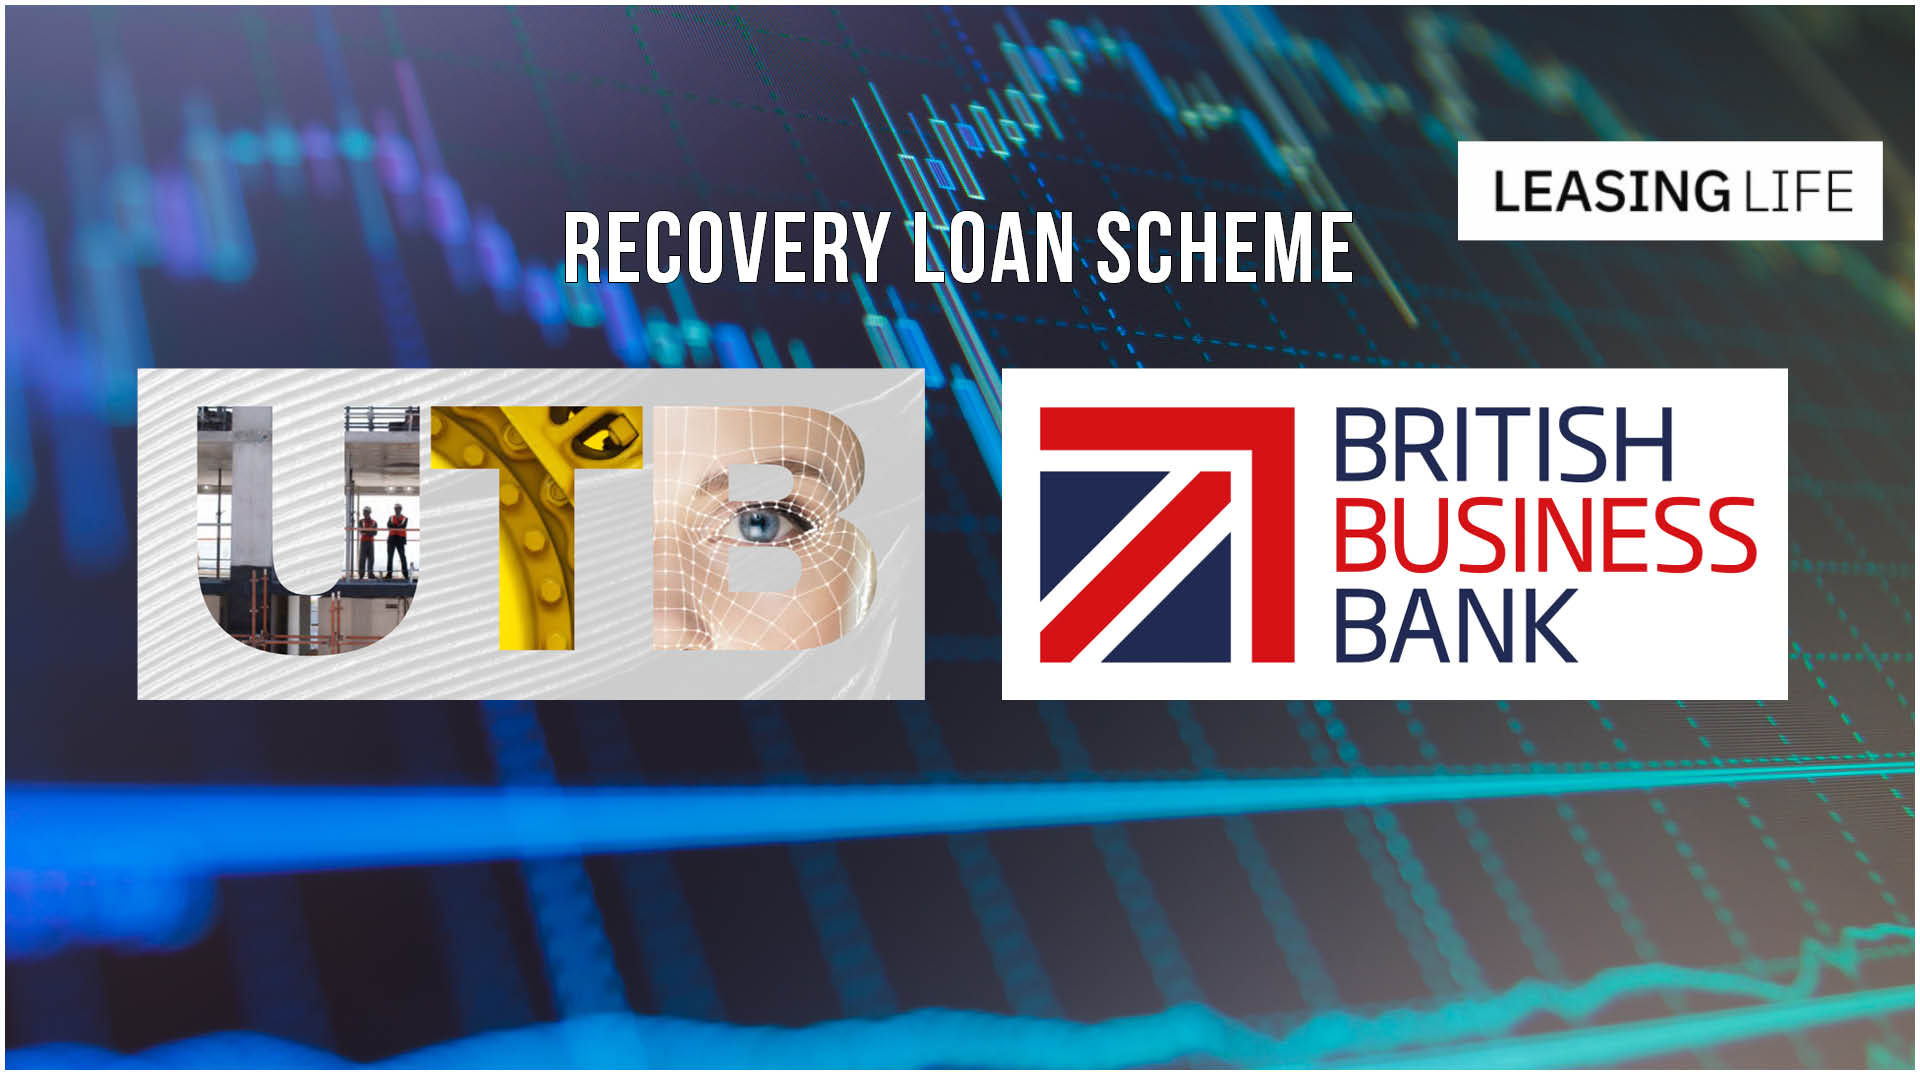 United Trust Bank begins offering Recovery Loan Scheme